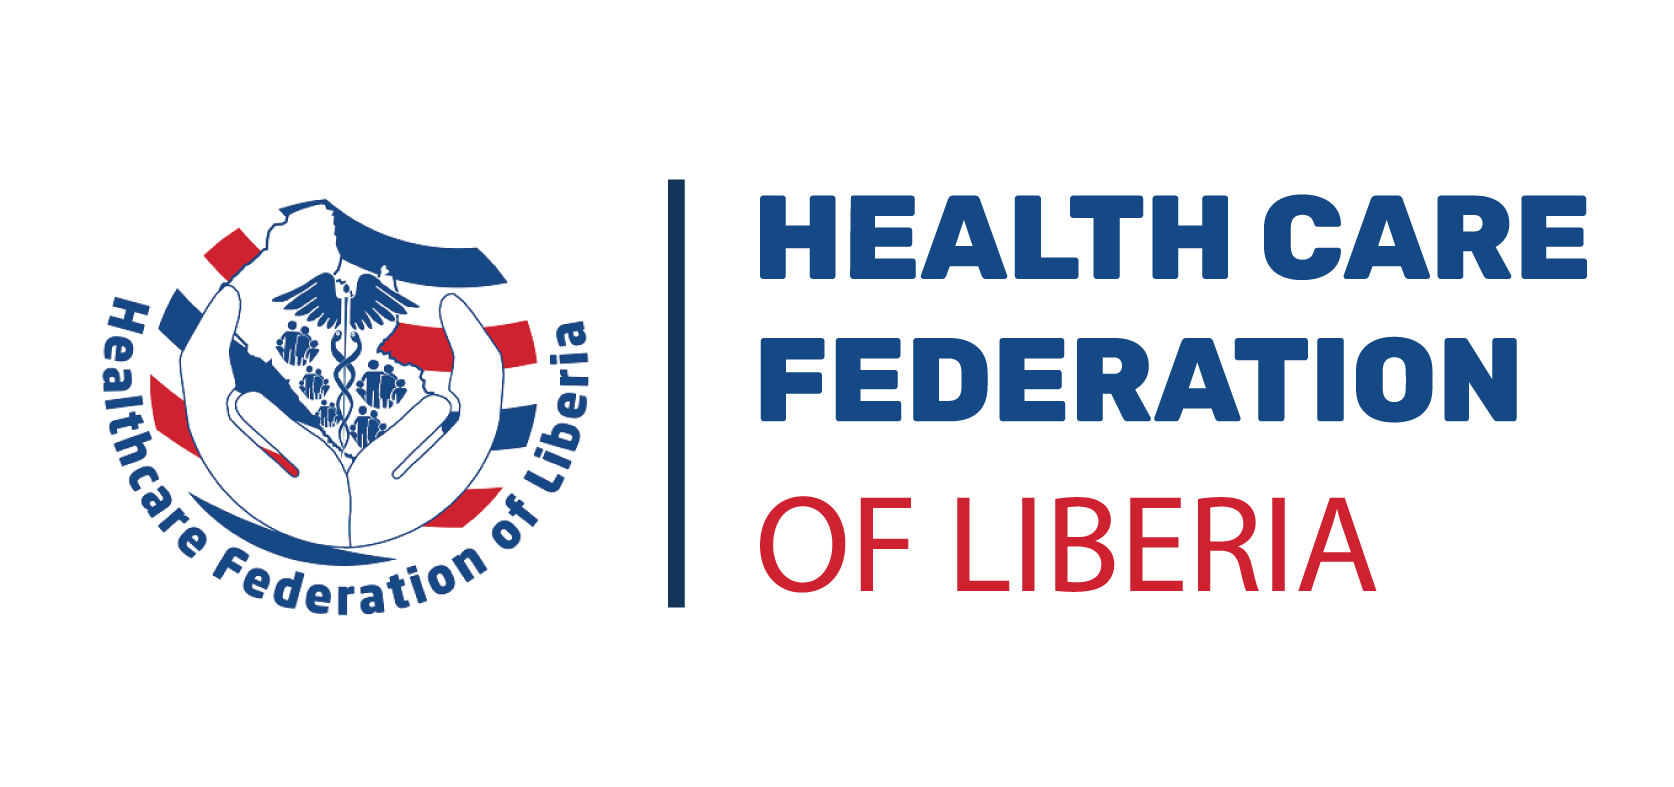 Healthcare Federation of Liberia